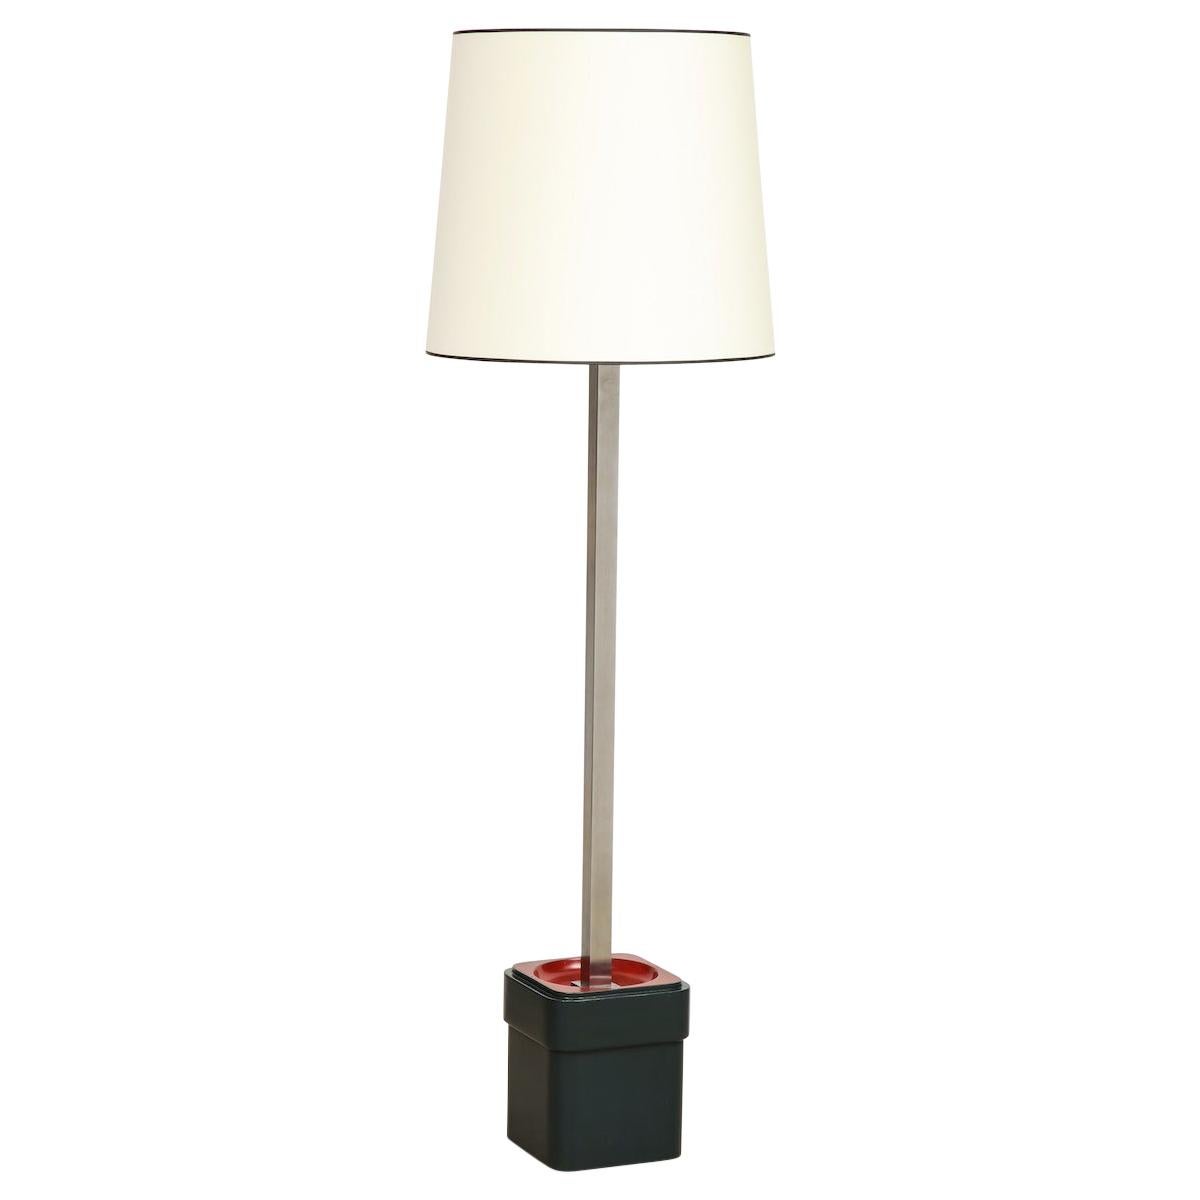 Paul Laszlo Floor Lamp For Sale